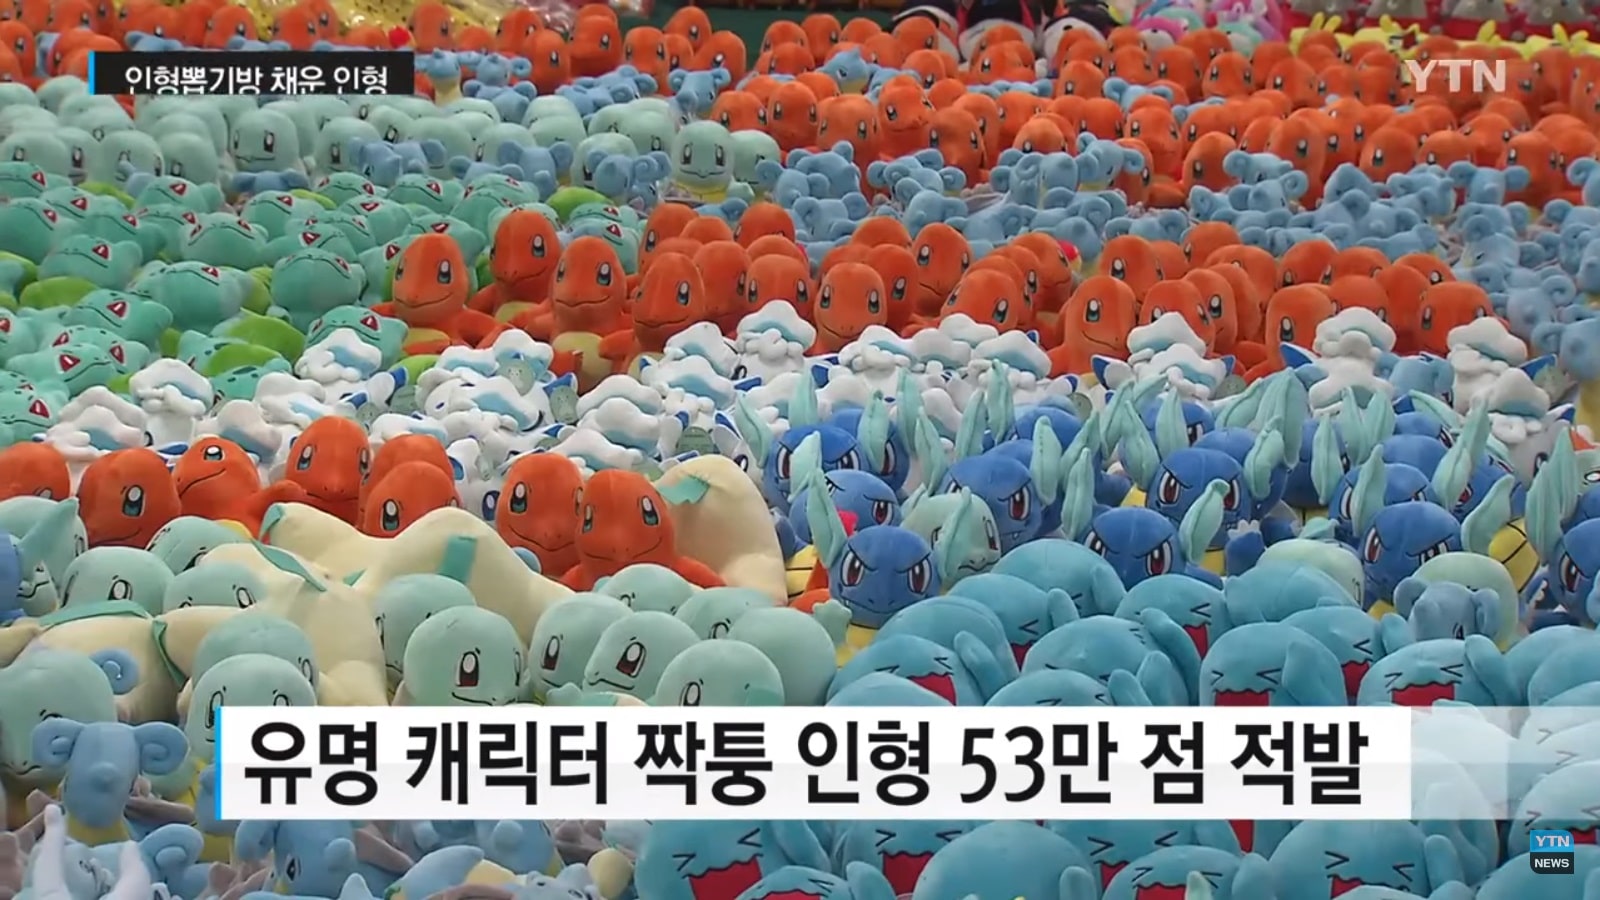 Incautan medio millón de peluches falsos de Pokémon en Corea del Sur-GamersRD